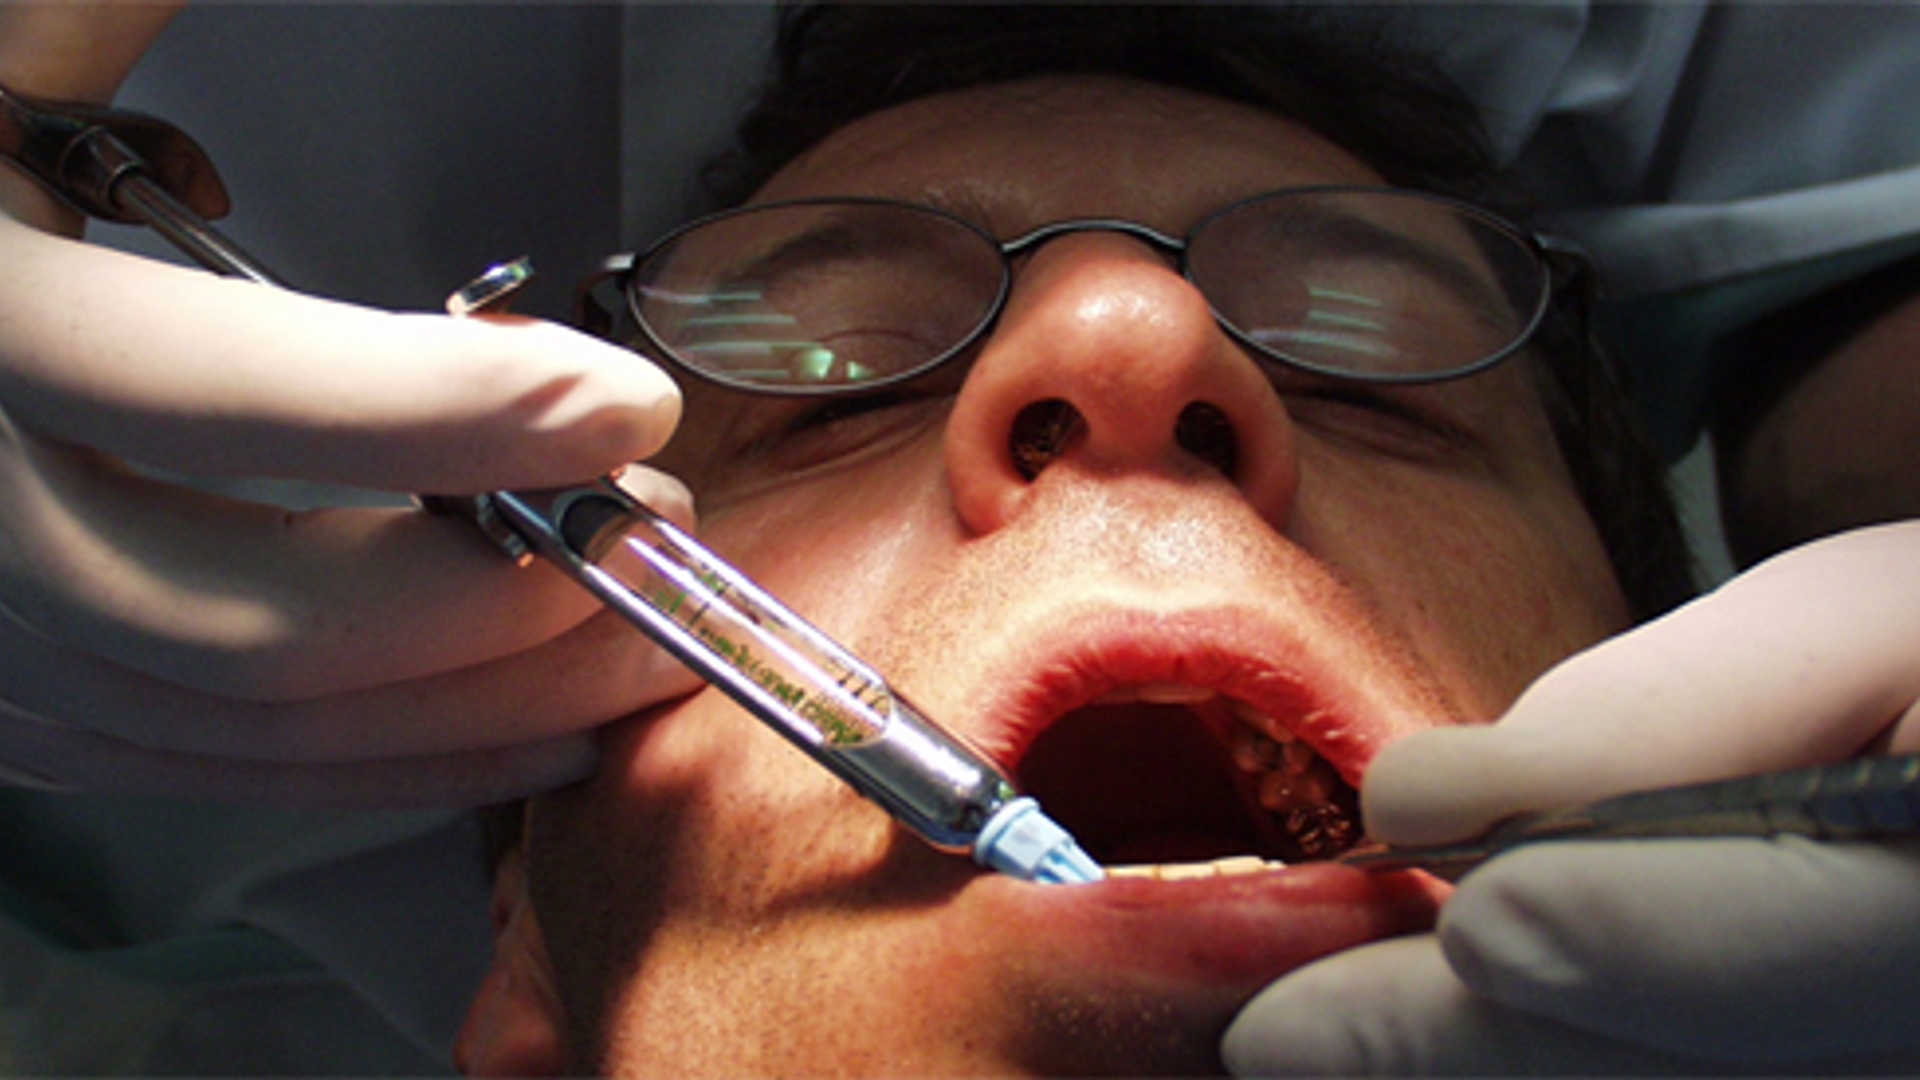 tandartsbehandeling2_05.jpg